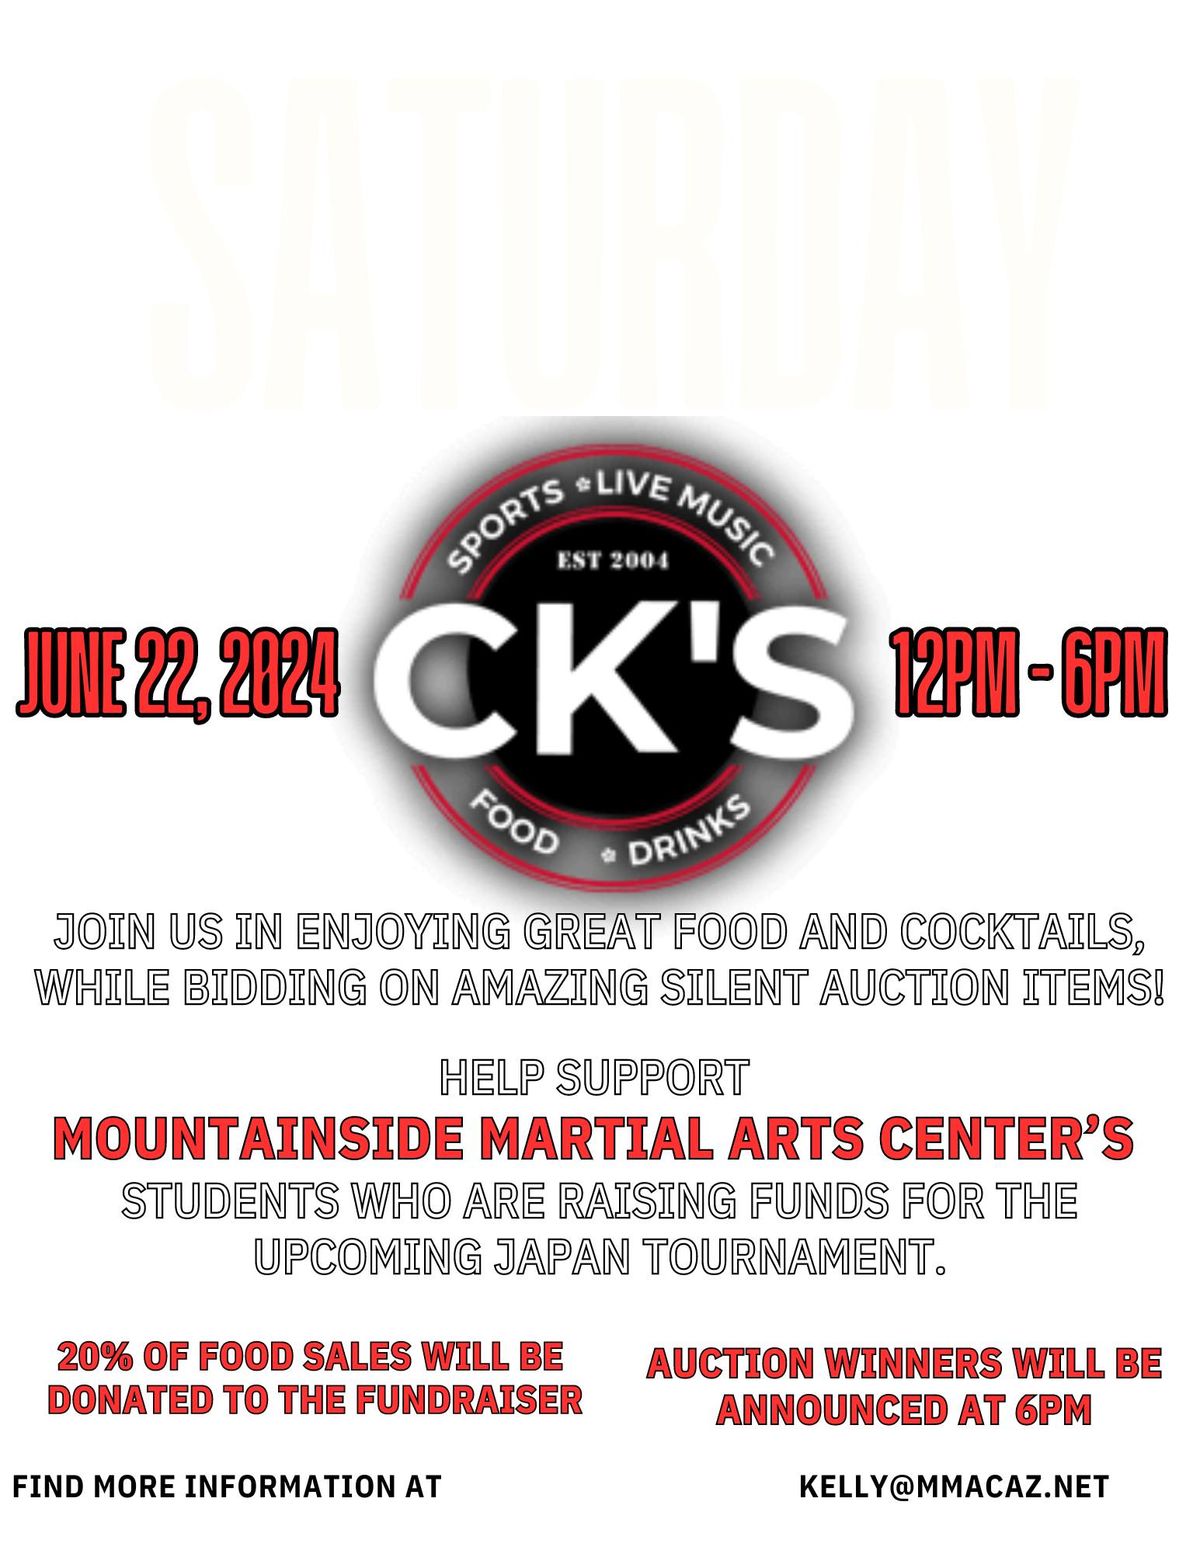 Self Defense and Japan Tournament Fundraiser